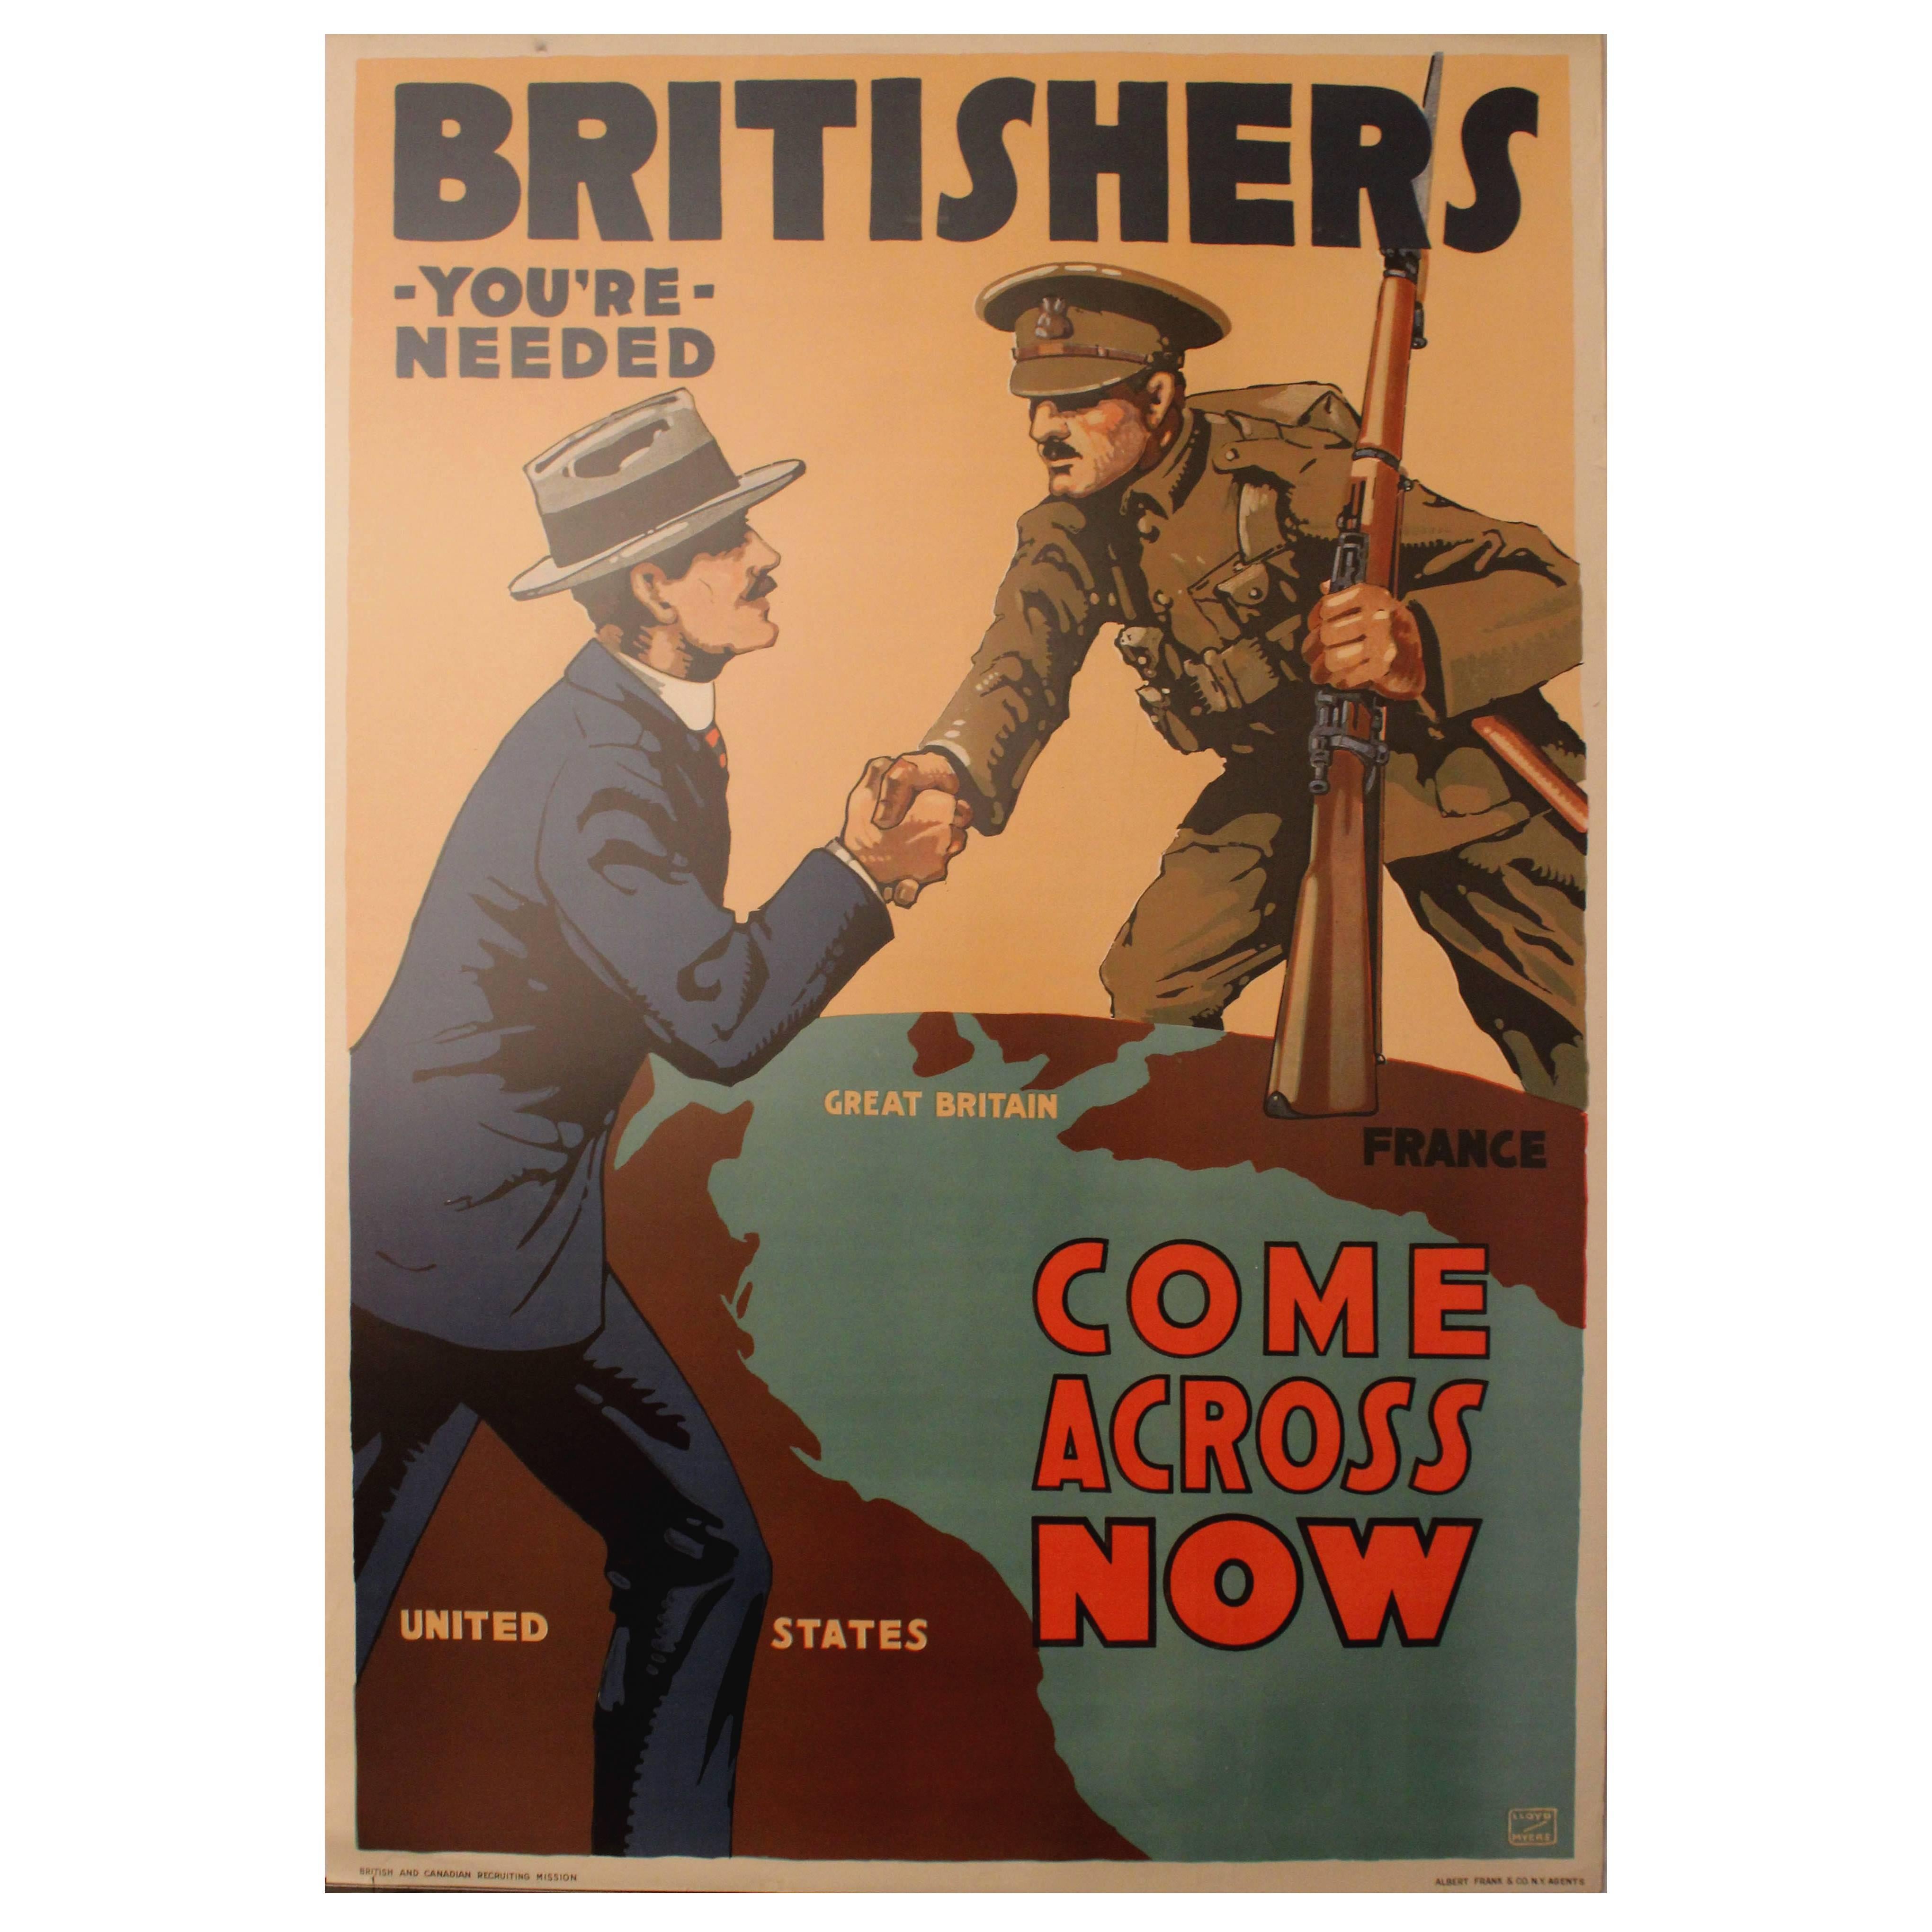 Original Vintage 1917 World War I Propaganda Poster "Britishers You're Needed"